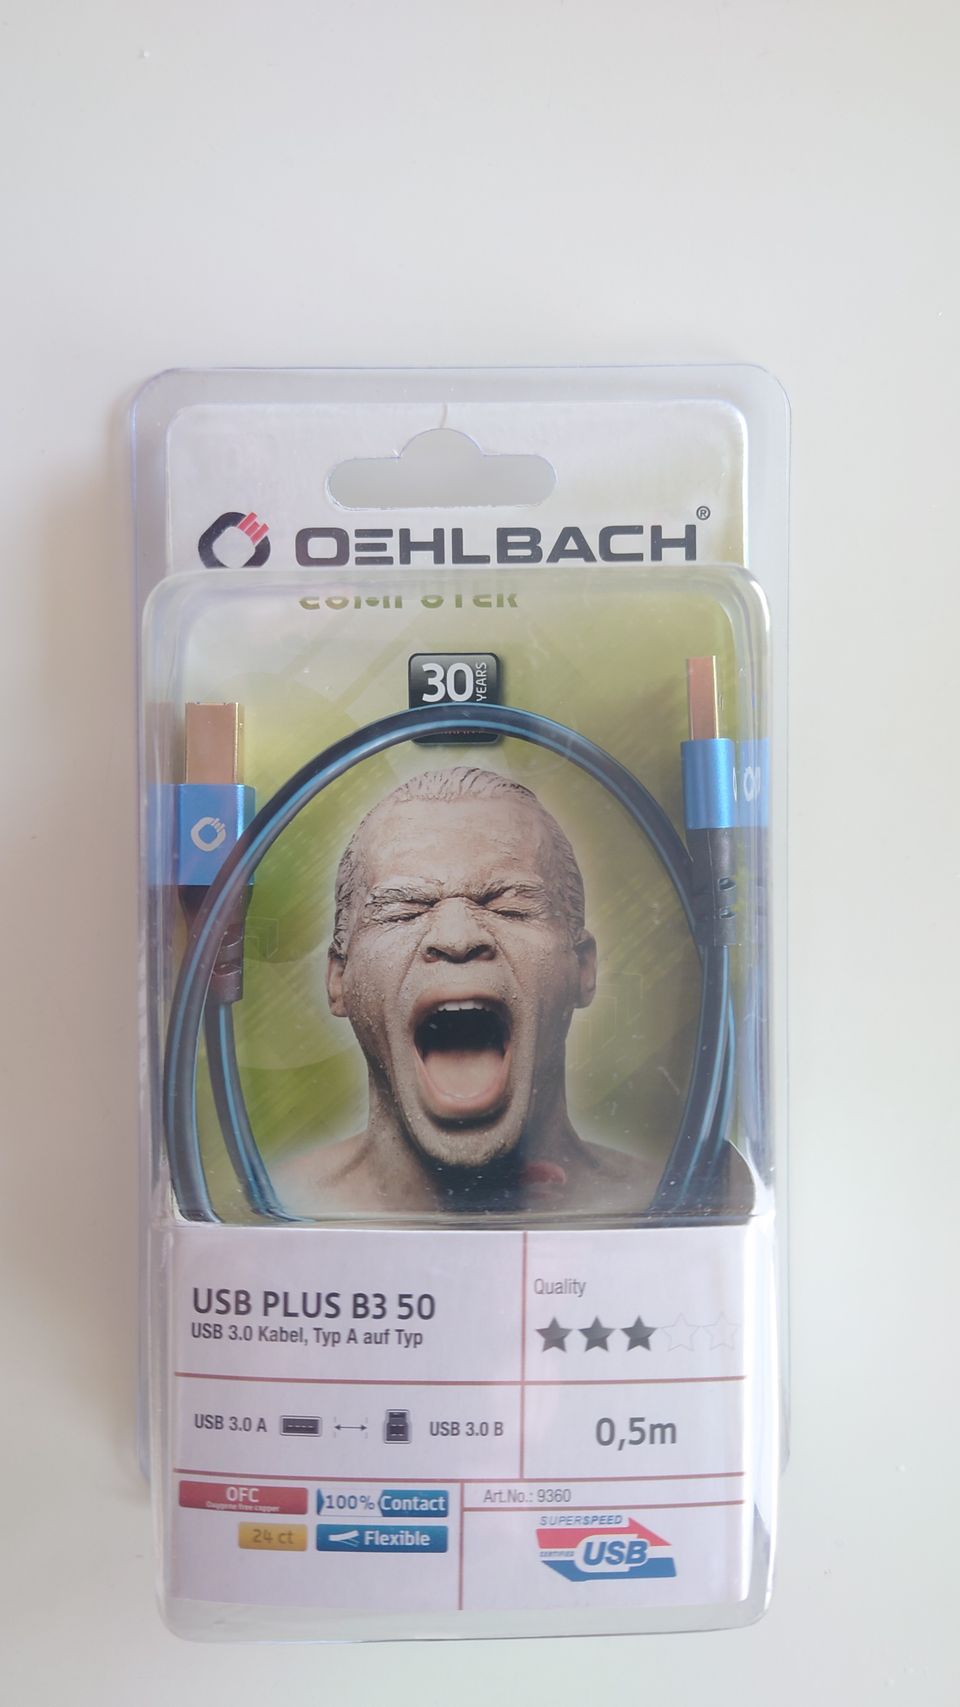 OEHLBACH 2.0 USB Plus B3 kaapeli. 0,5m.